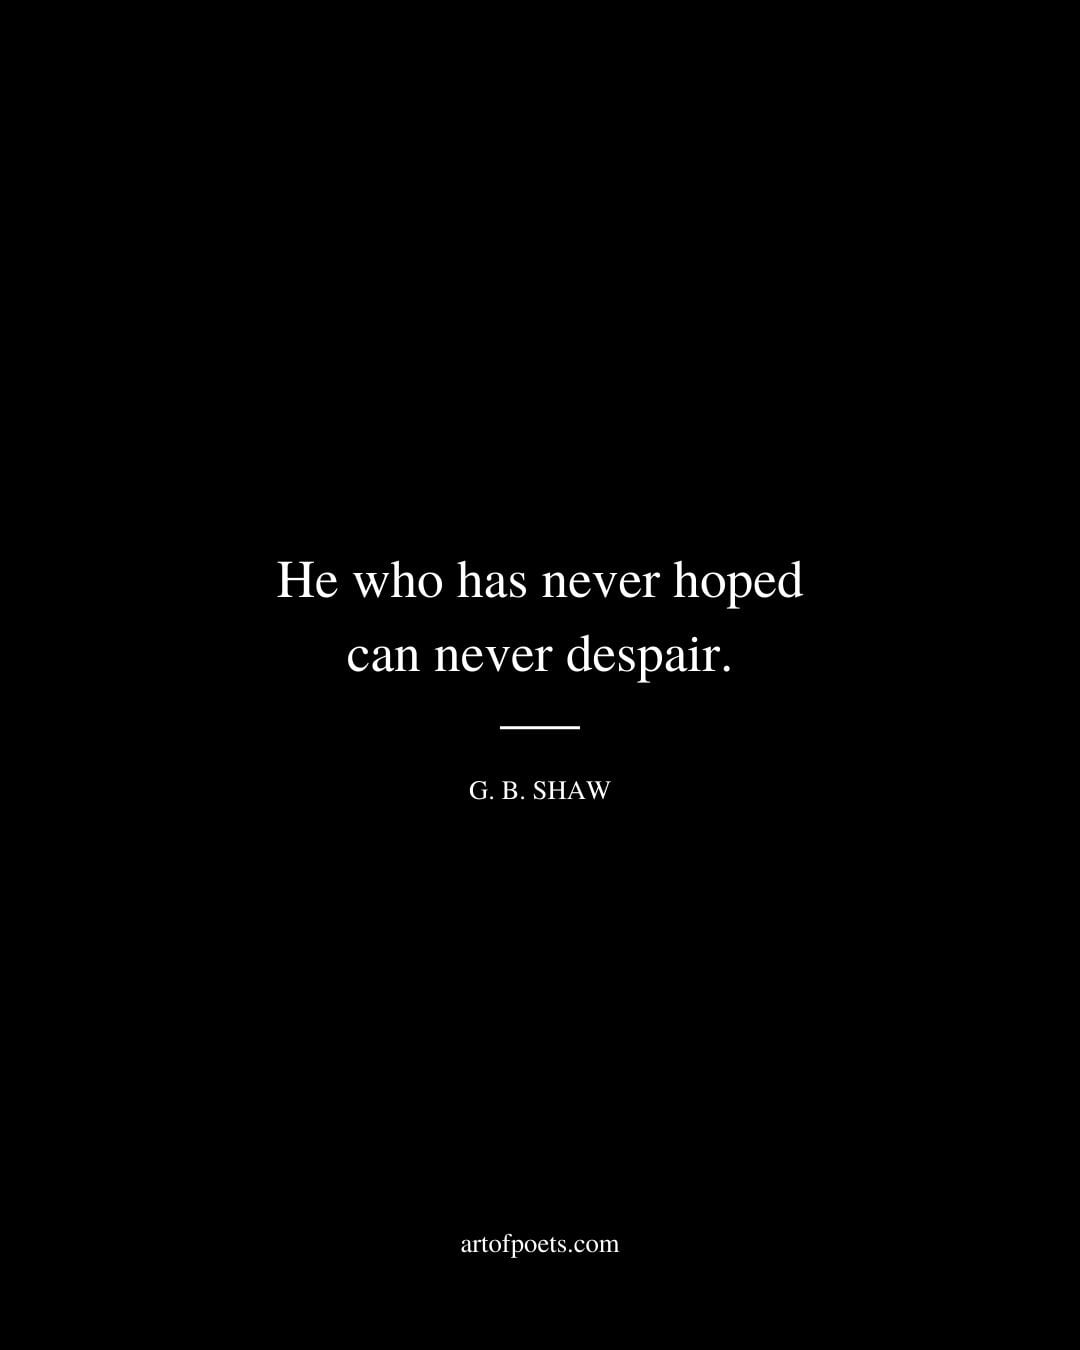 He who has never hoped can never despair. George Bernard Shaw